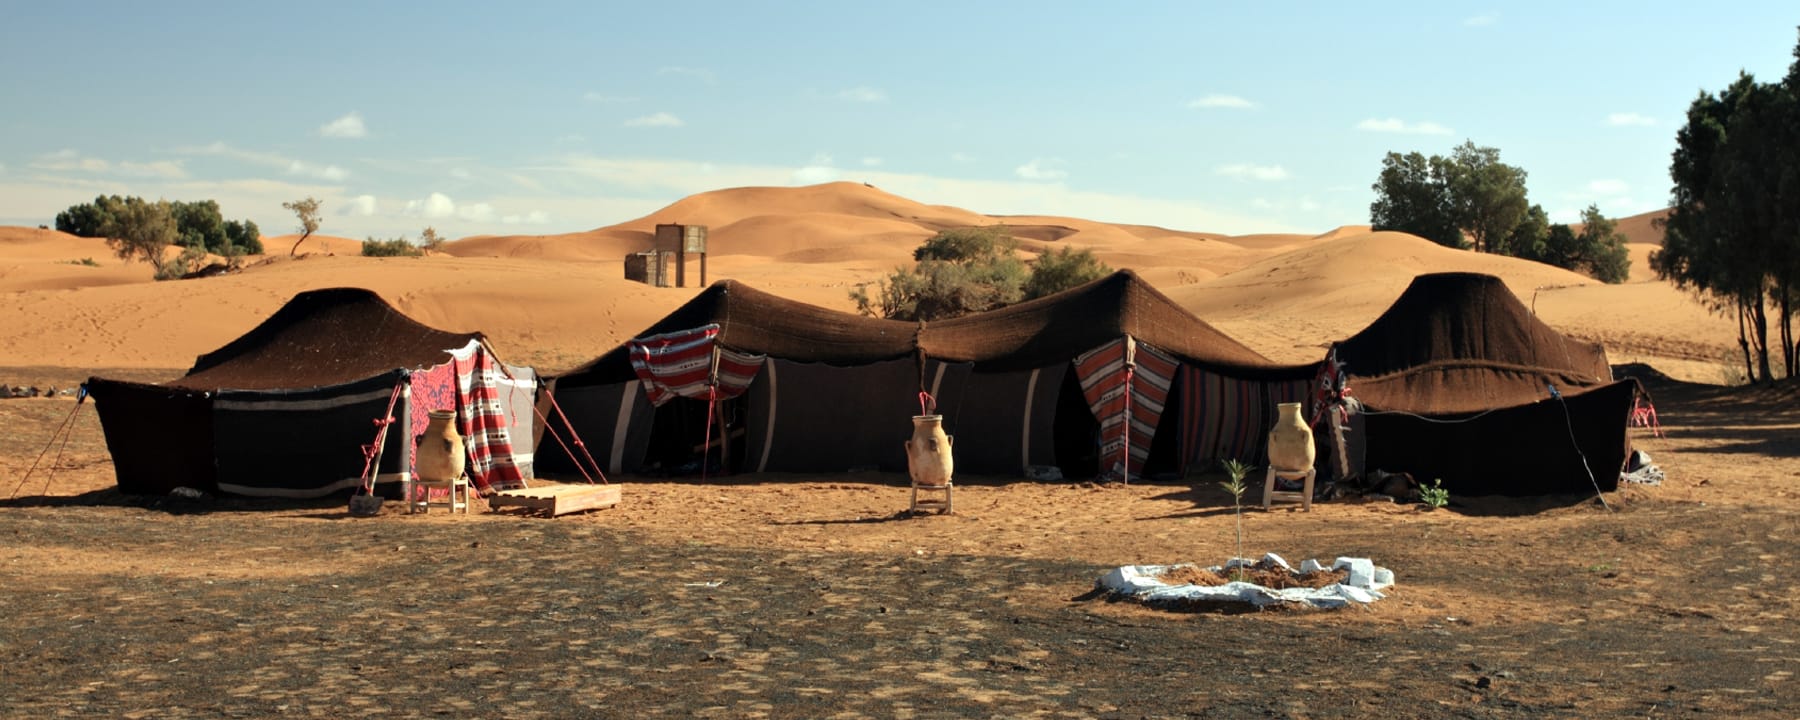 Erg Chebbi desert Morocco Merzouga dunes Berber tents camp, Source: iStock